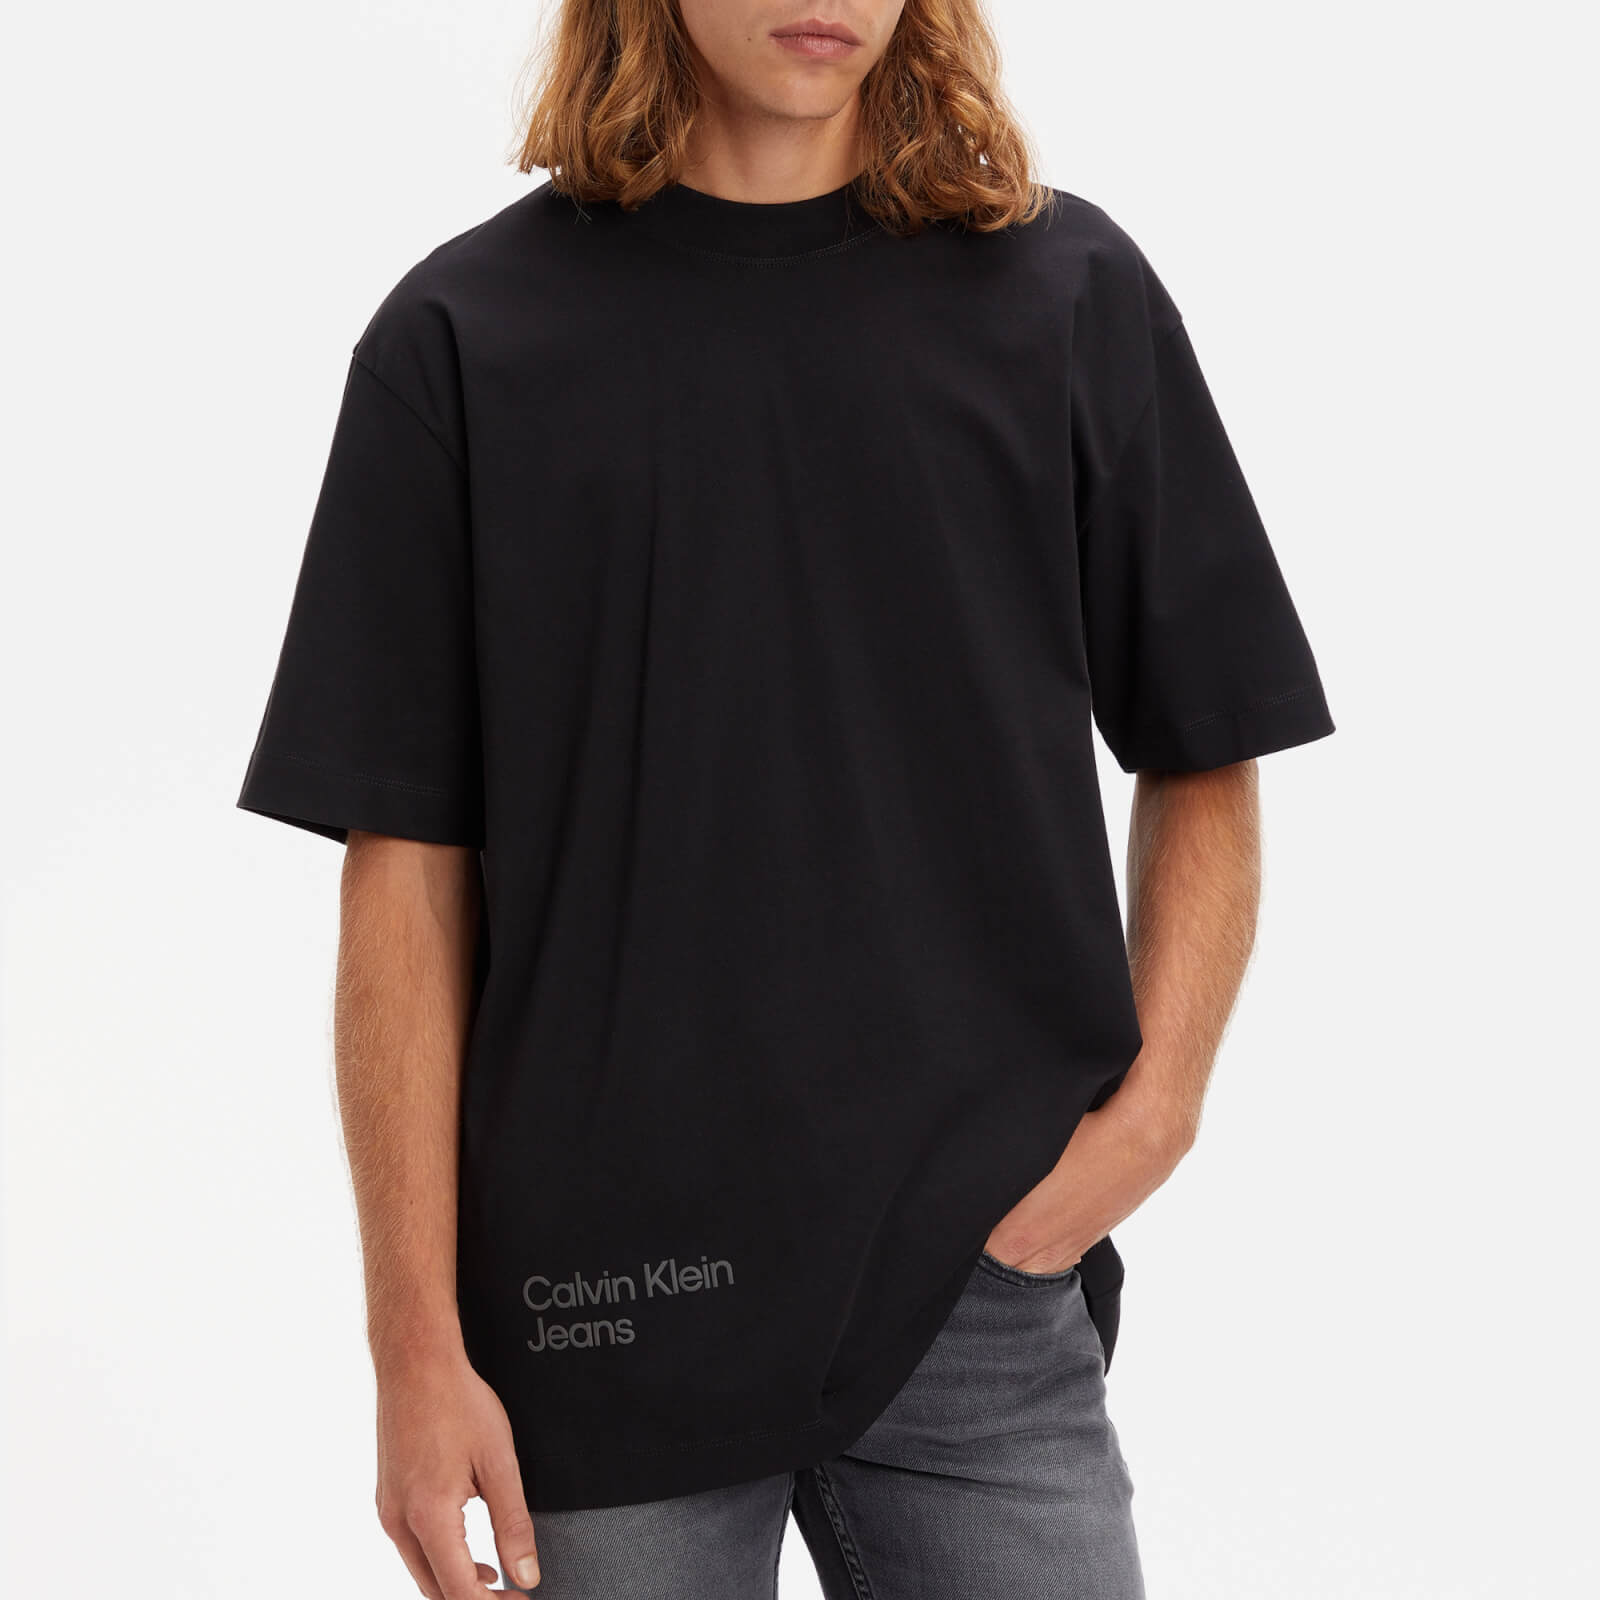 Calvin Klein Jeans Blurred Coloured Address Cotton T-Shirt